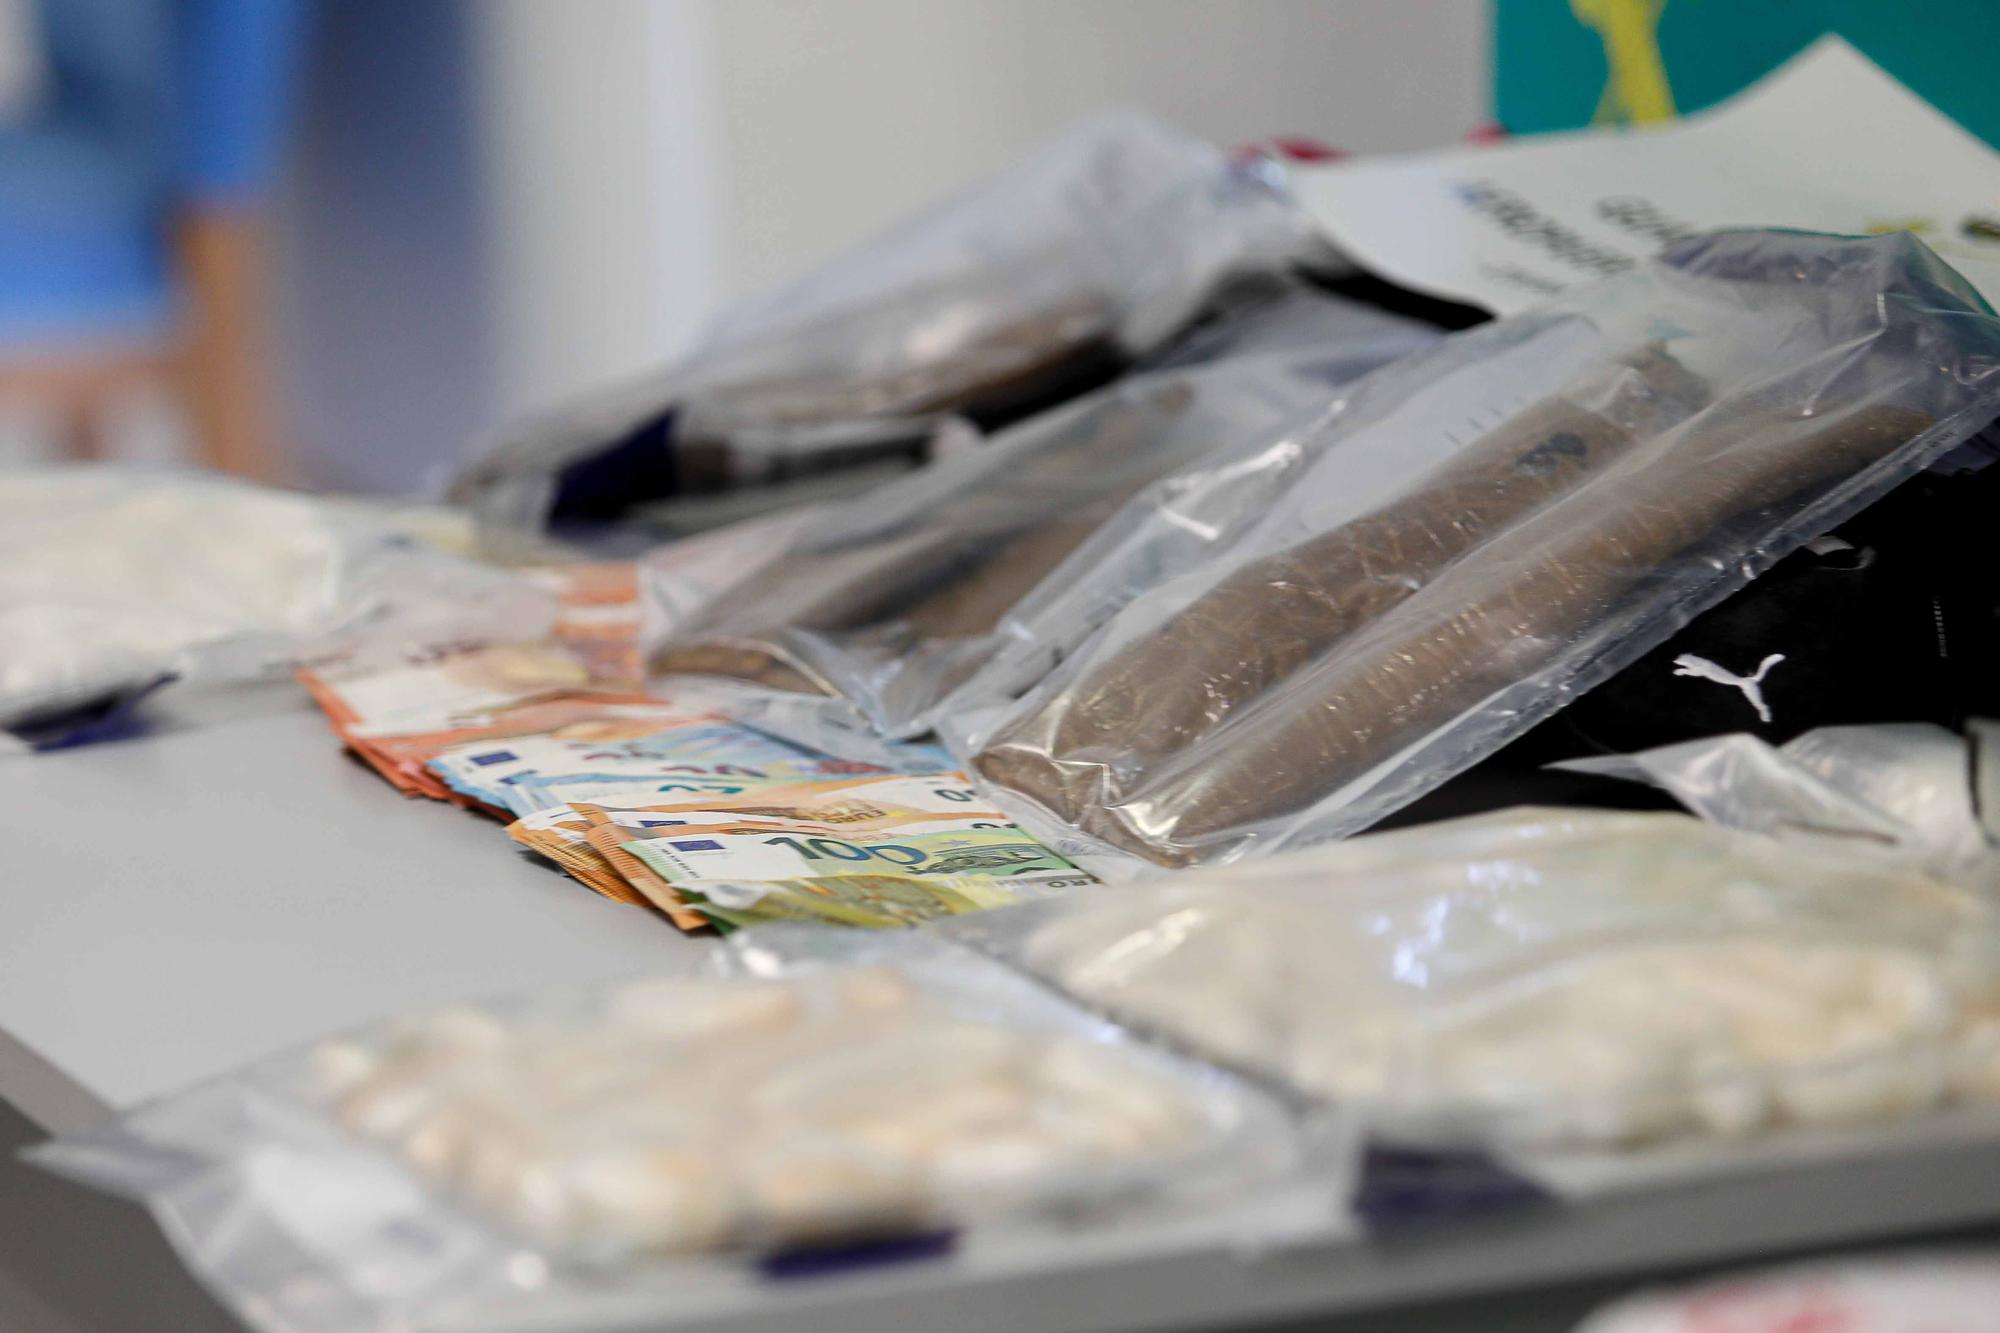 La Guardia Civil intercepta 16 kilos de cocaína en Ibiza en dos incautaciones